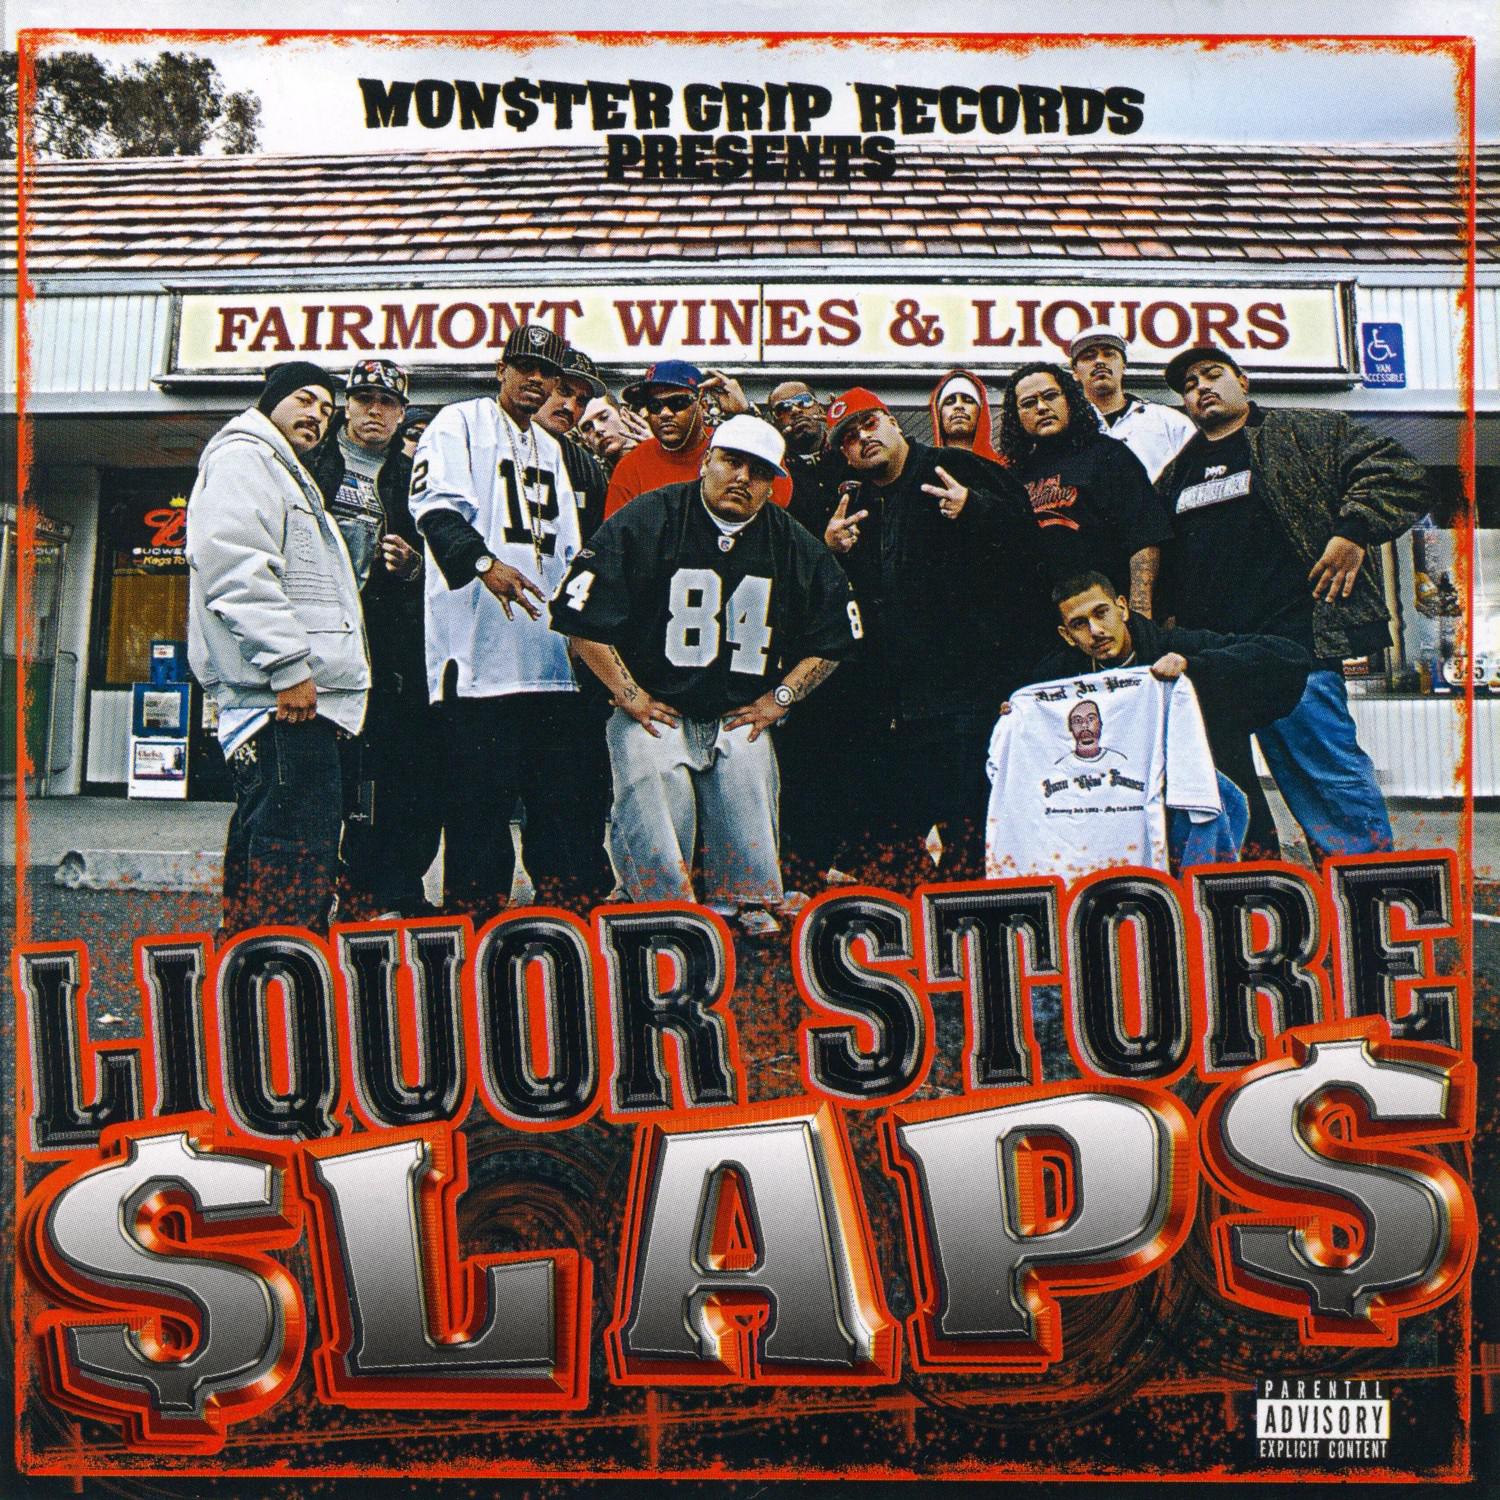 Liquor Store Slaps